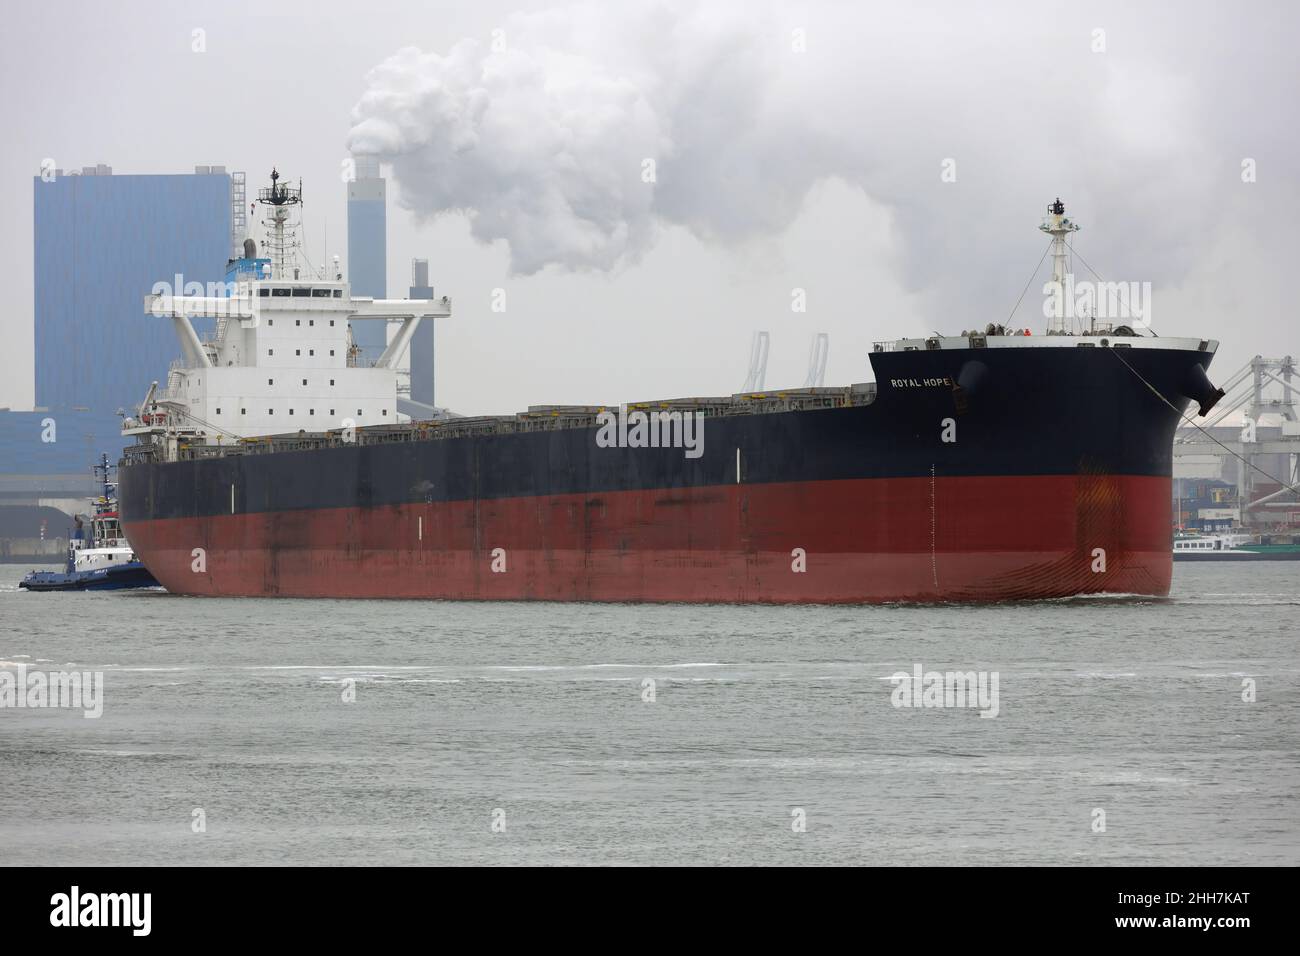 The bulk carrier Royal Hope will leave the port of Rotterdam on September 4, 2021. Stock Photo